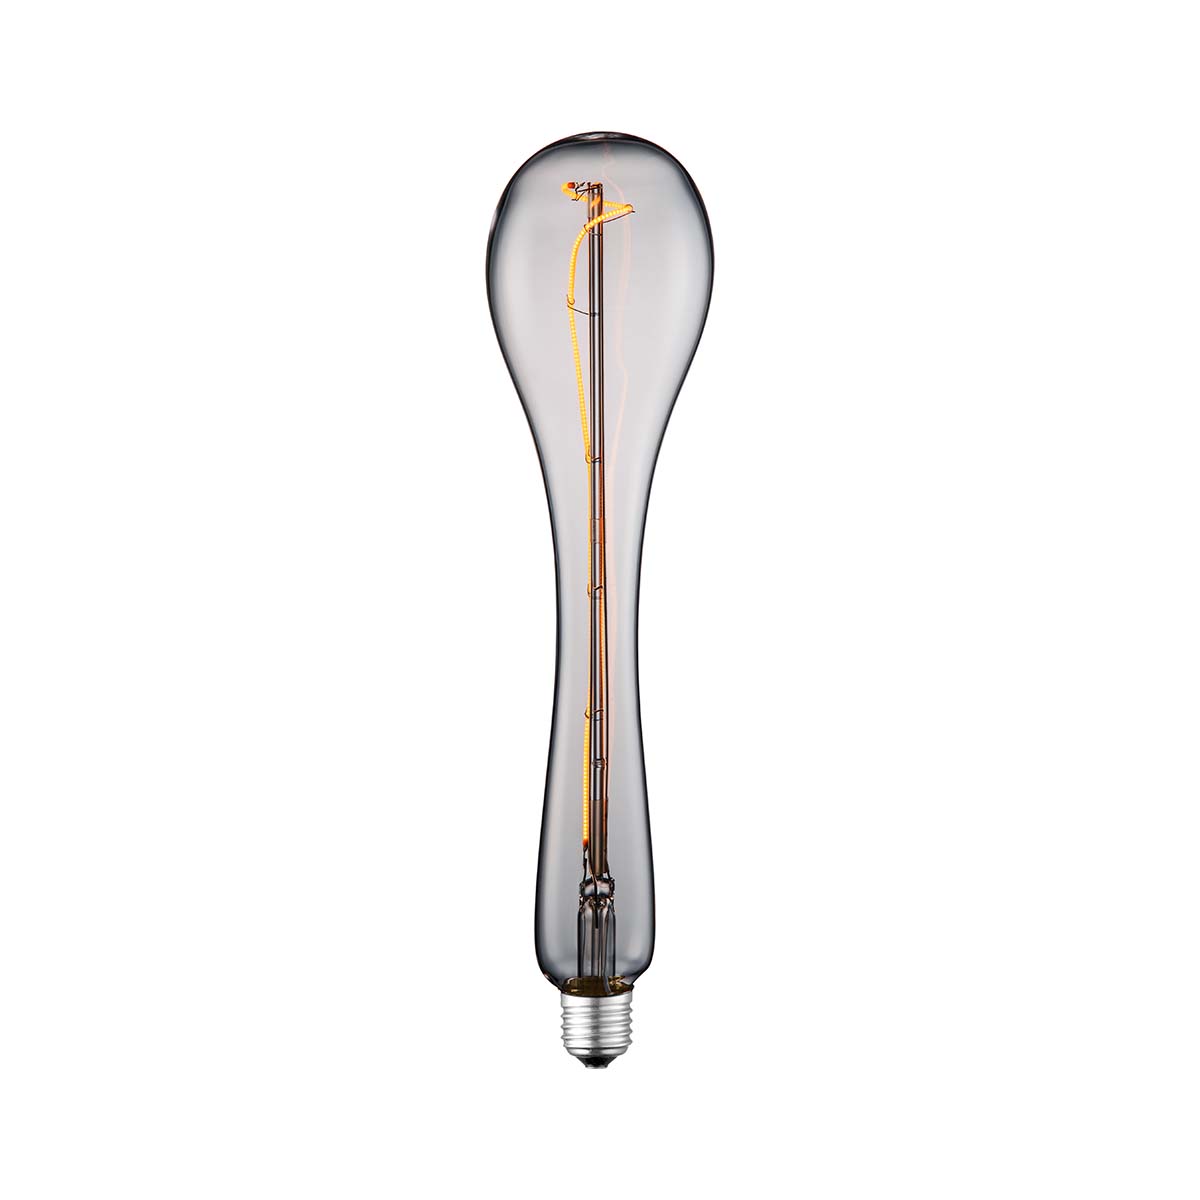 Tangla lighting - TLB-8108-04SM - LED Light Bulb Single Spiral filament - special 4W smoke - baton - dimmable - E27